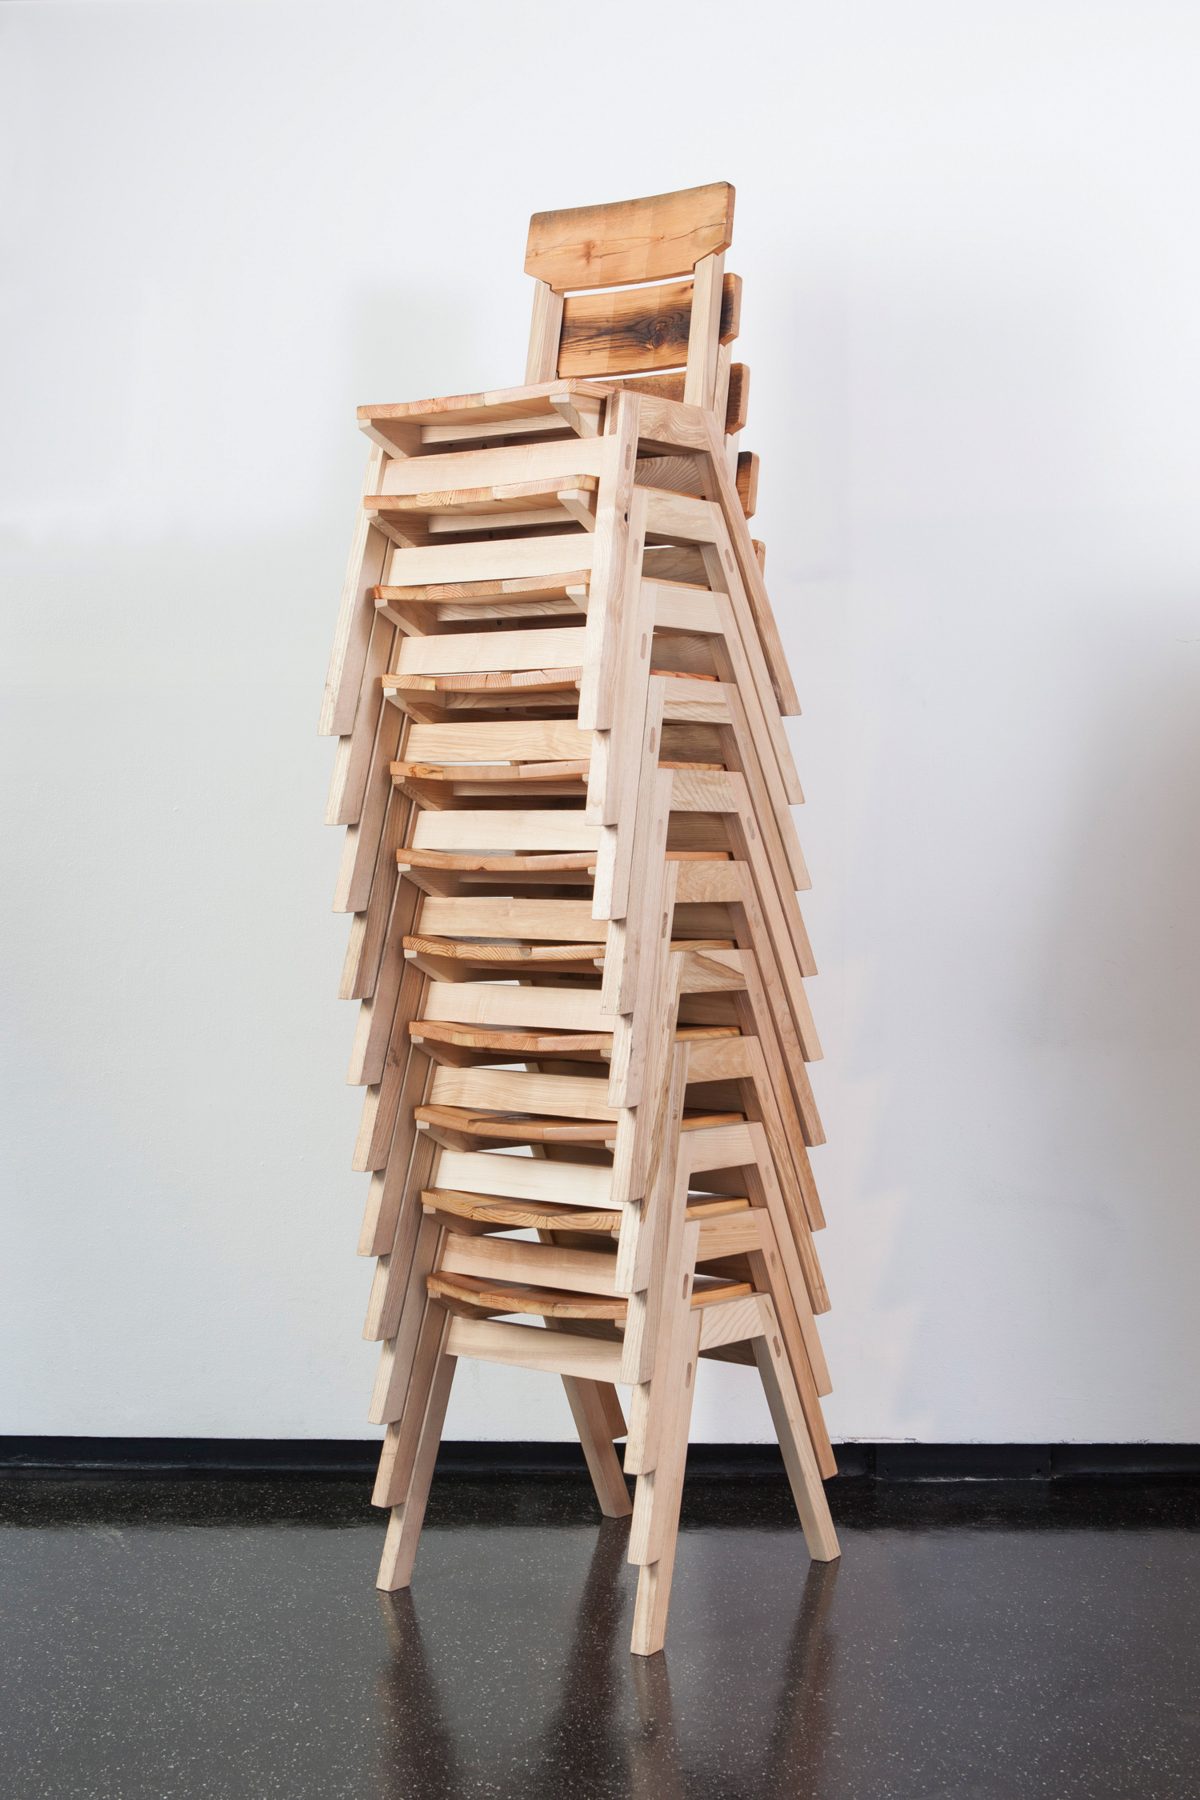 Jan Hendzel Studio camberwell stacker chair-3